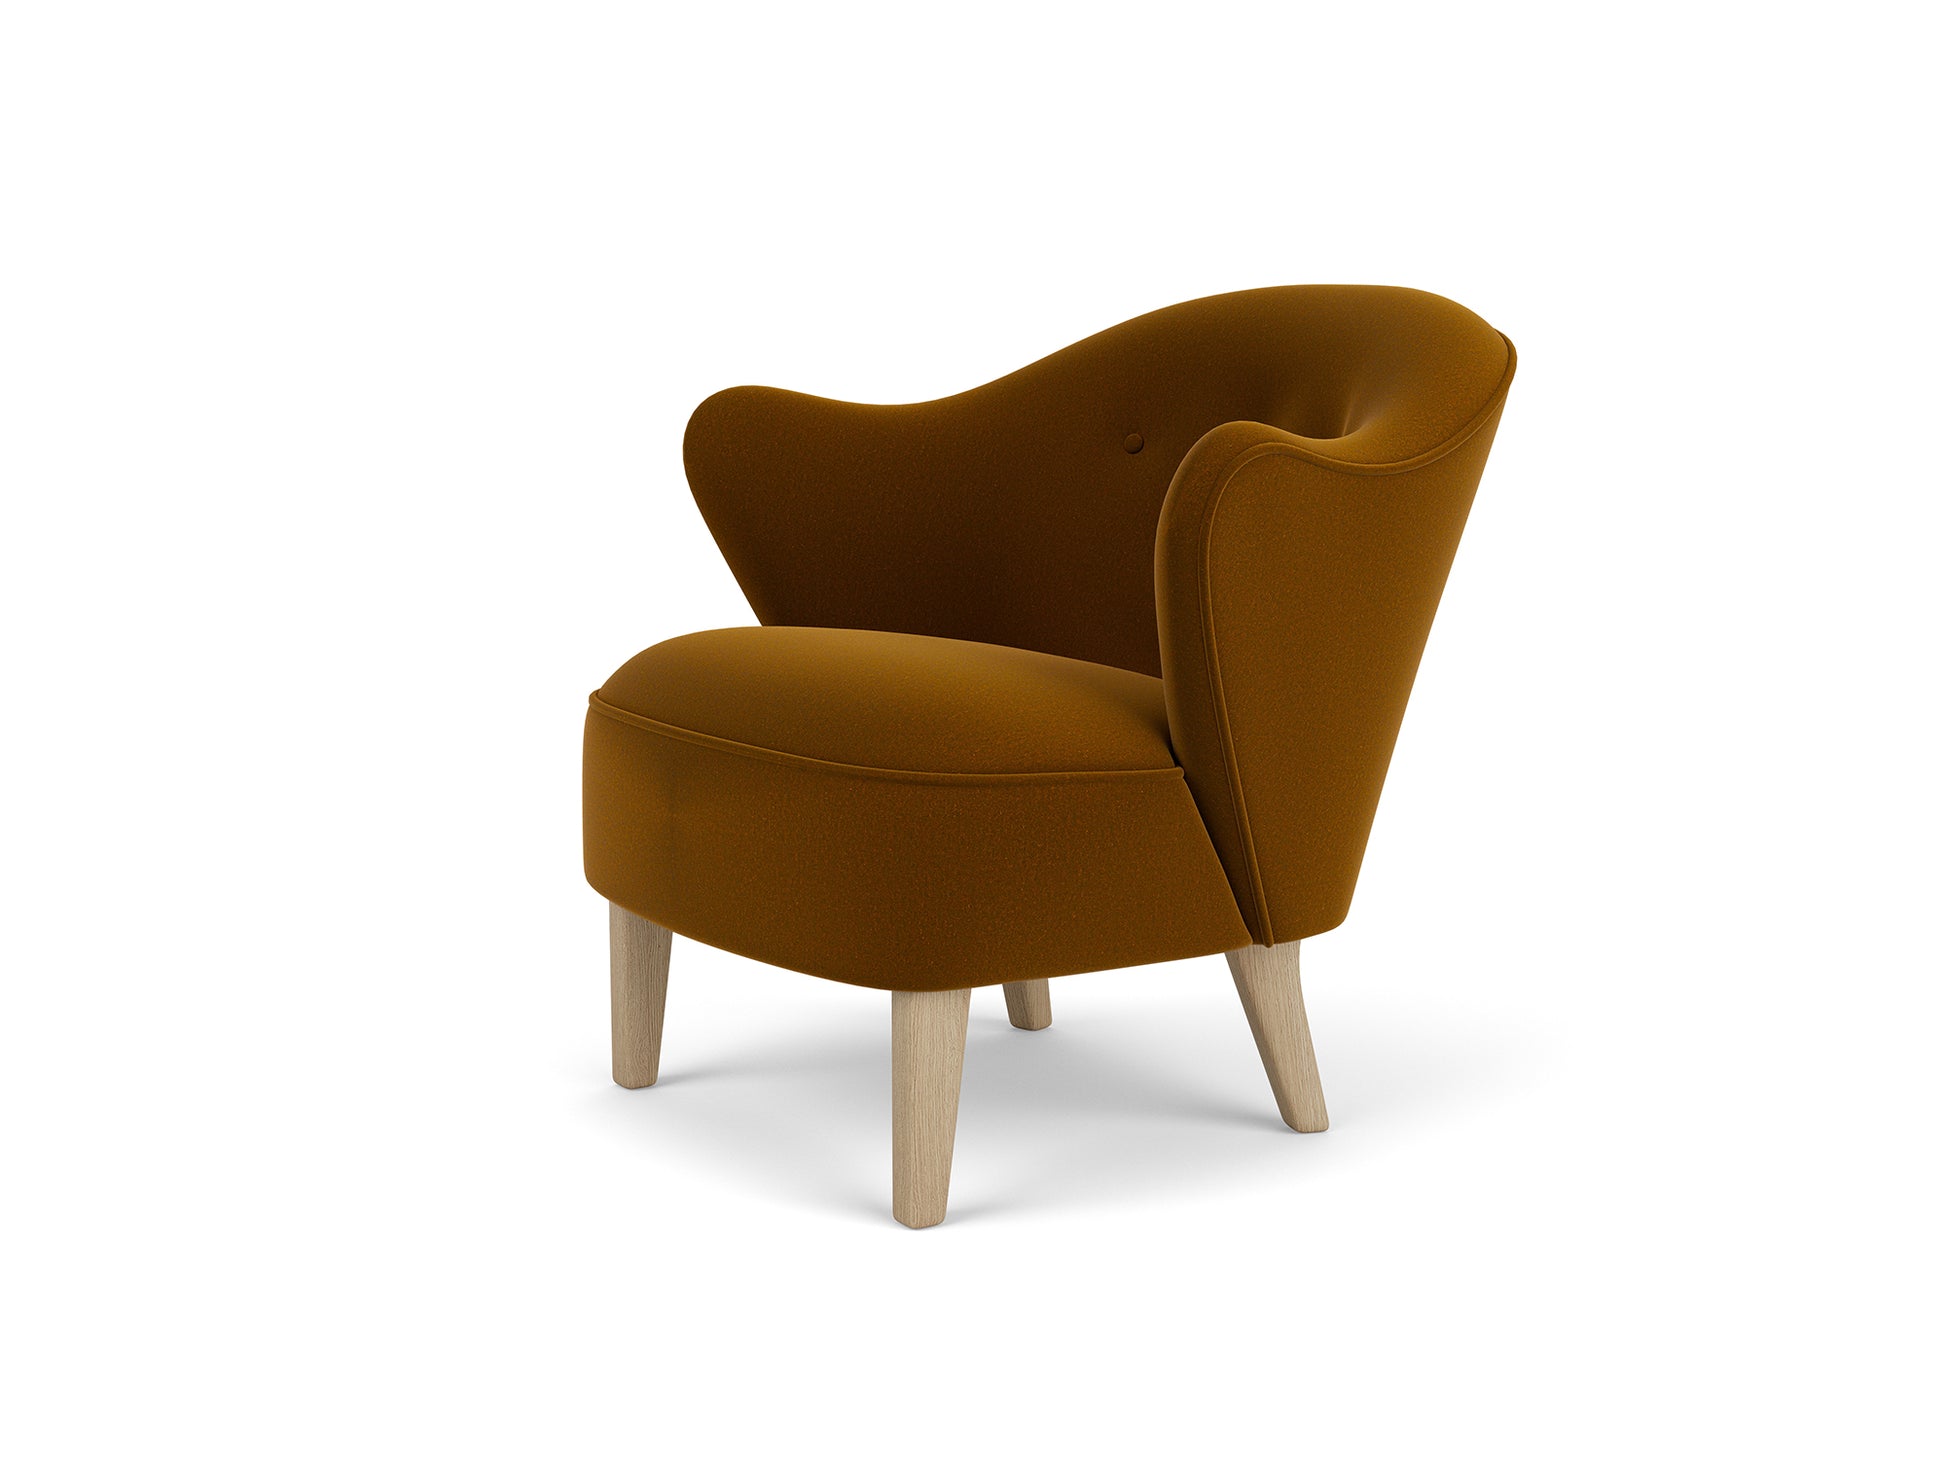 Ingeborg Lounge Chair by Audo Copenhagen - Natural Oak / Mohair 2600